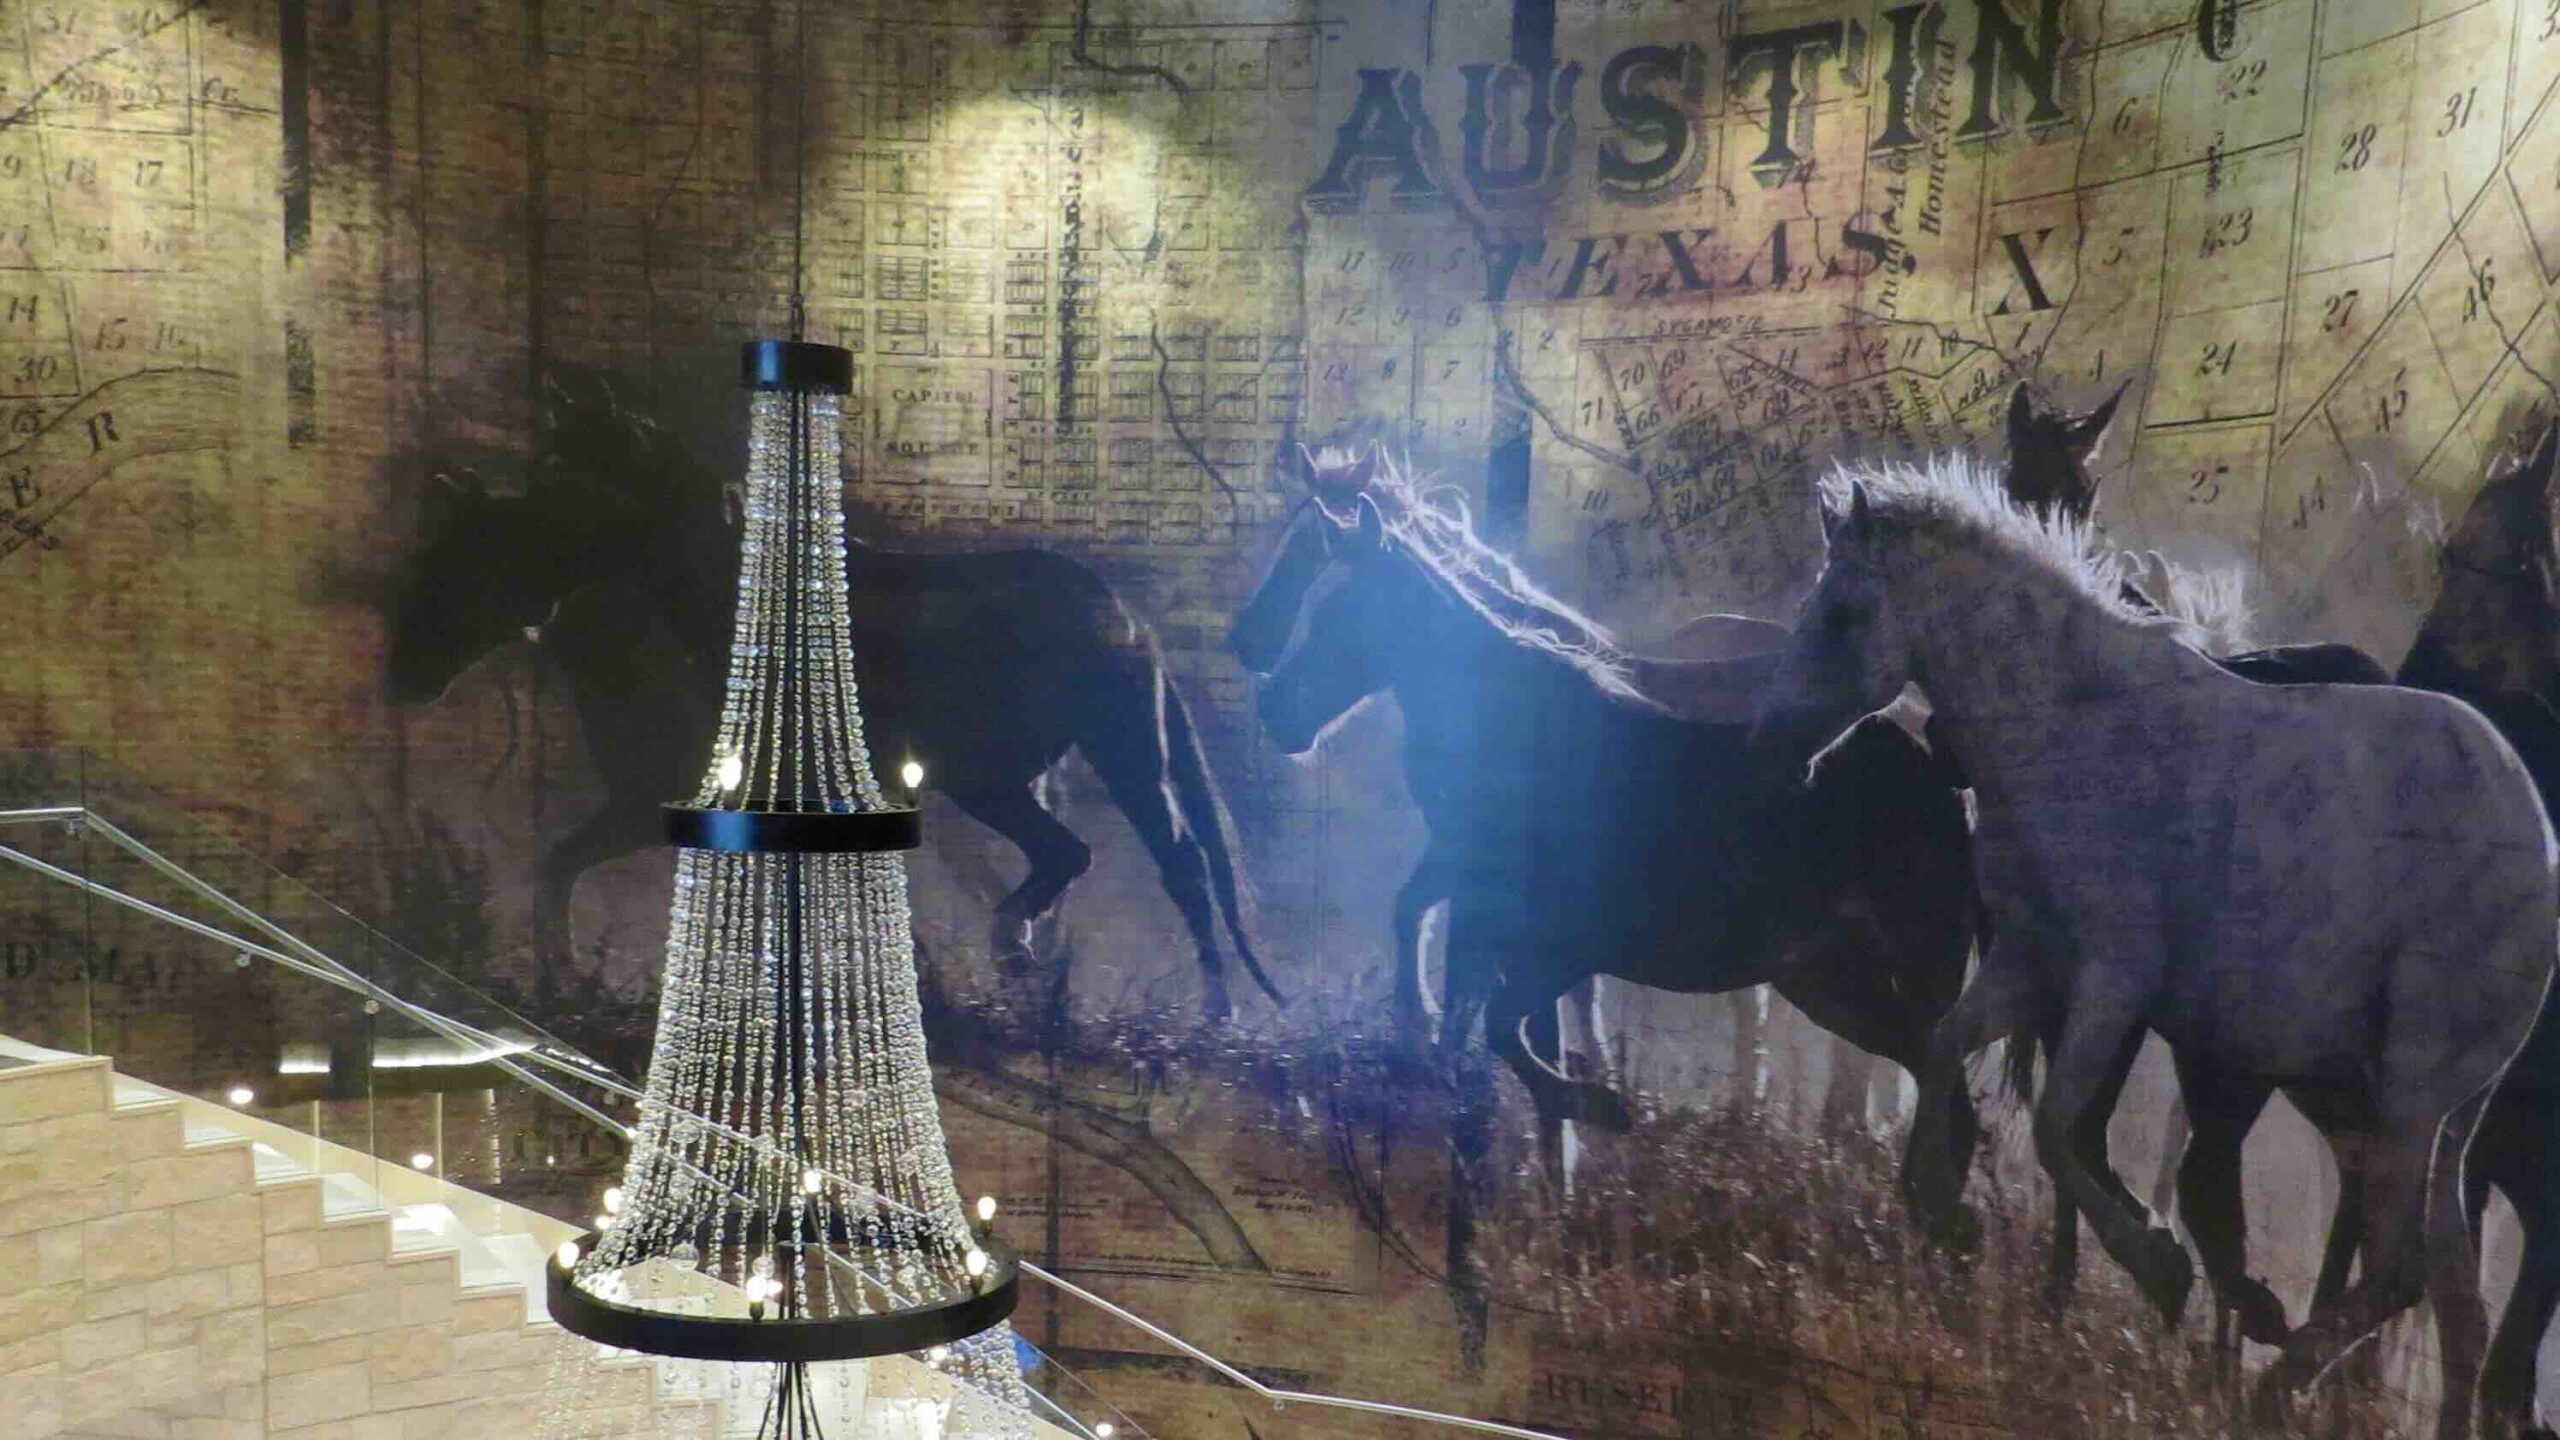 Stairwell Wild horses artwork at the Archer Hotel Austin